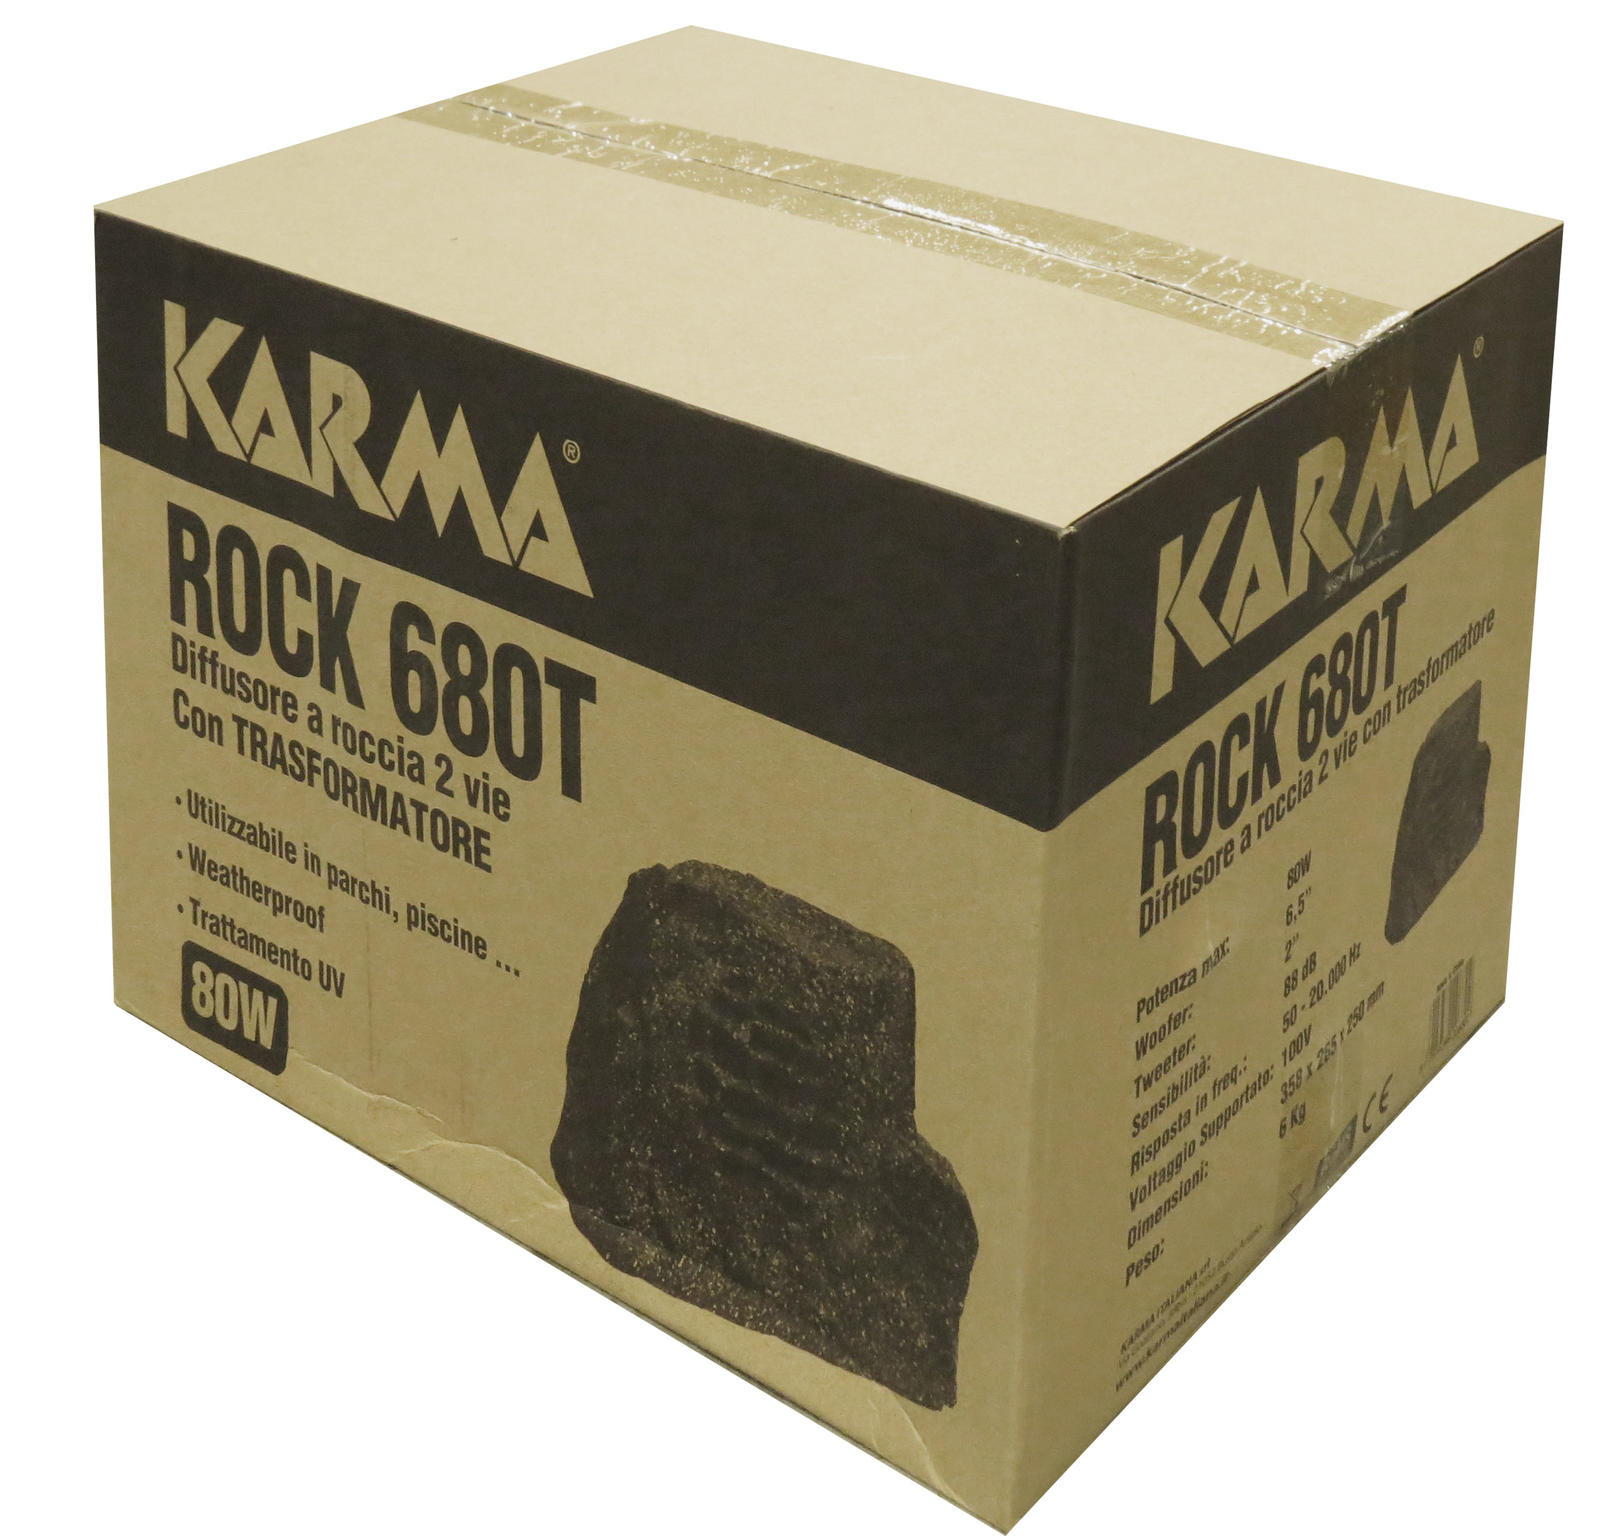 Karma ROCK 680T